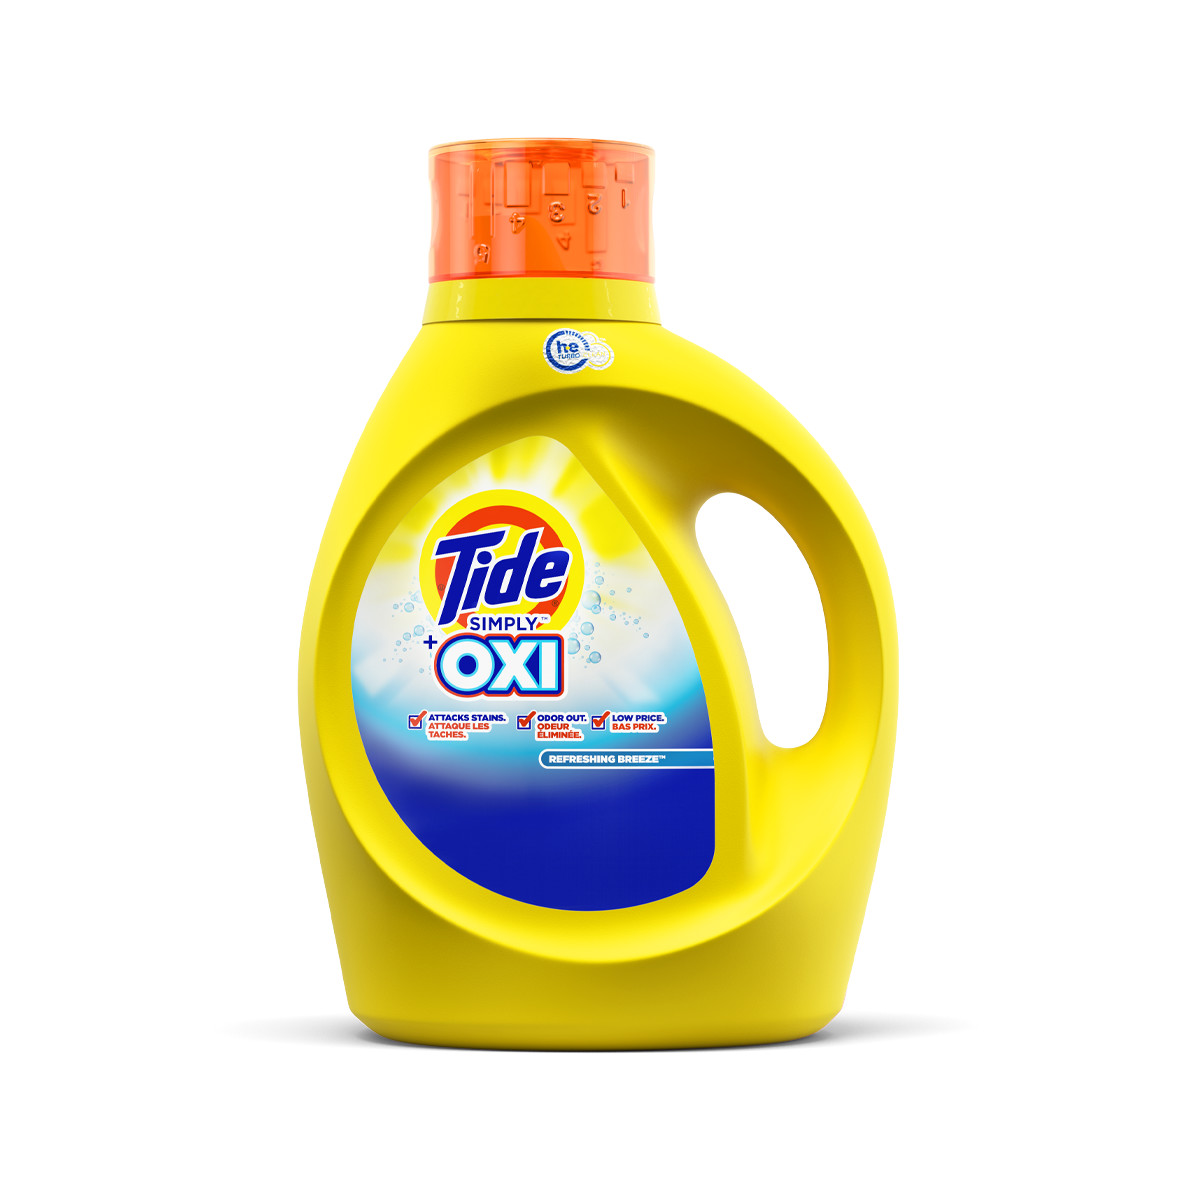 Tide Simply OXI Liquid Laundry Detergent